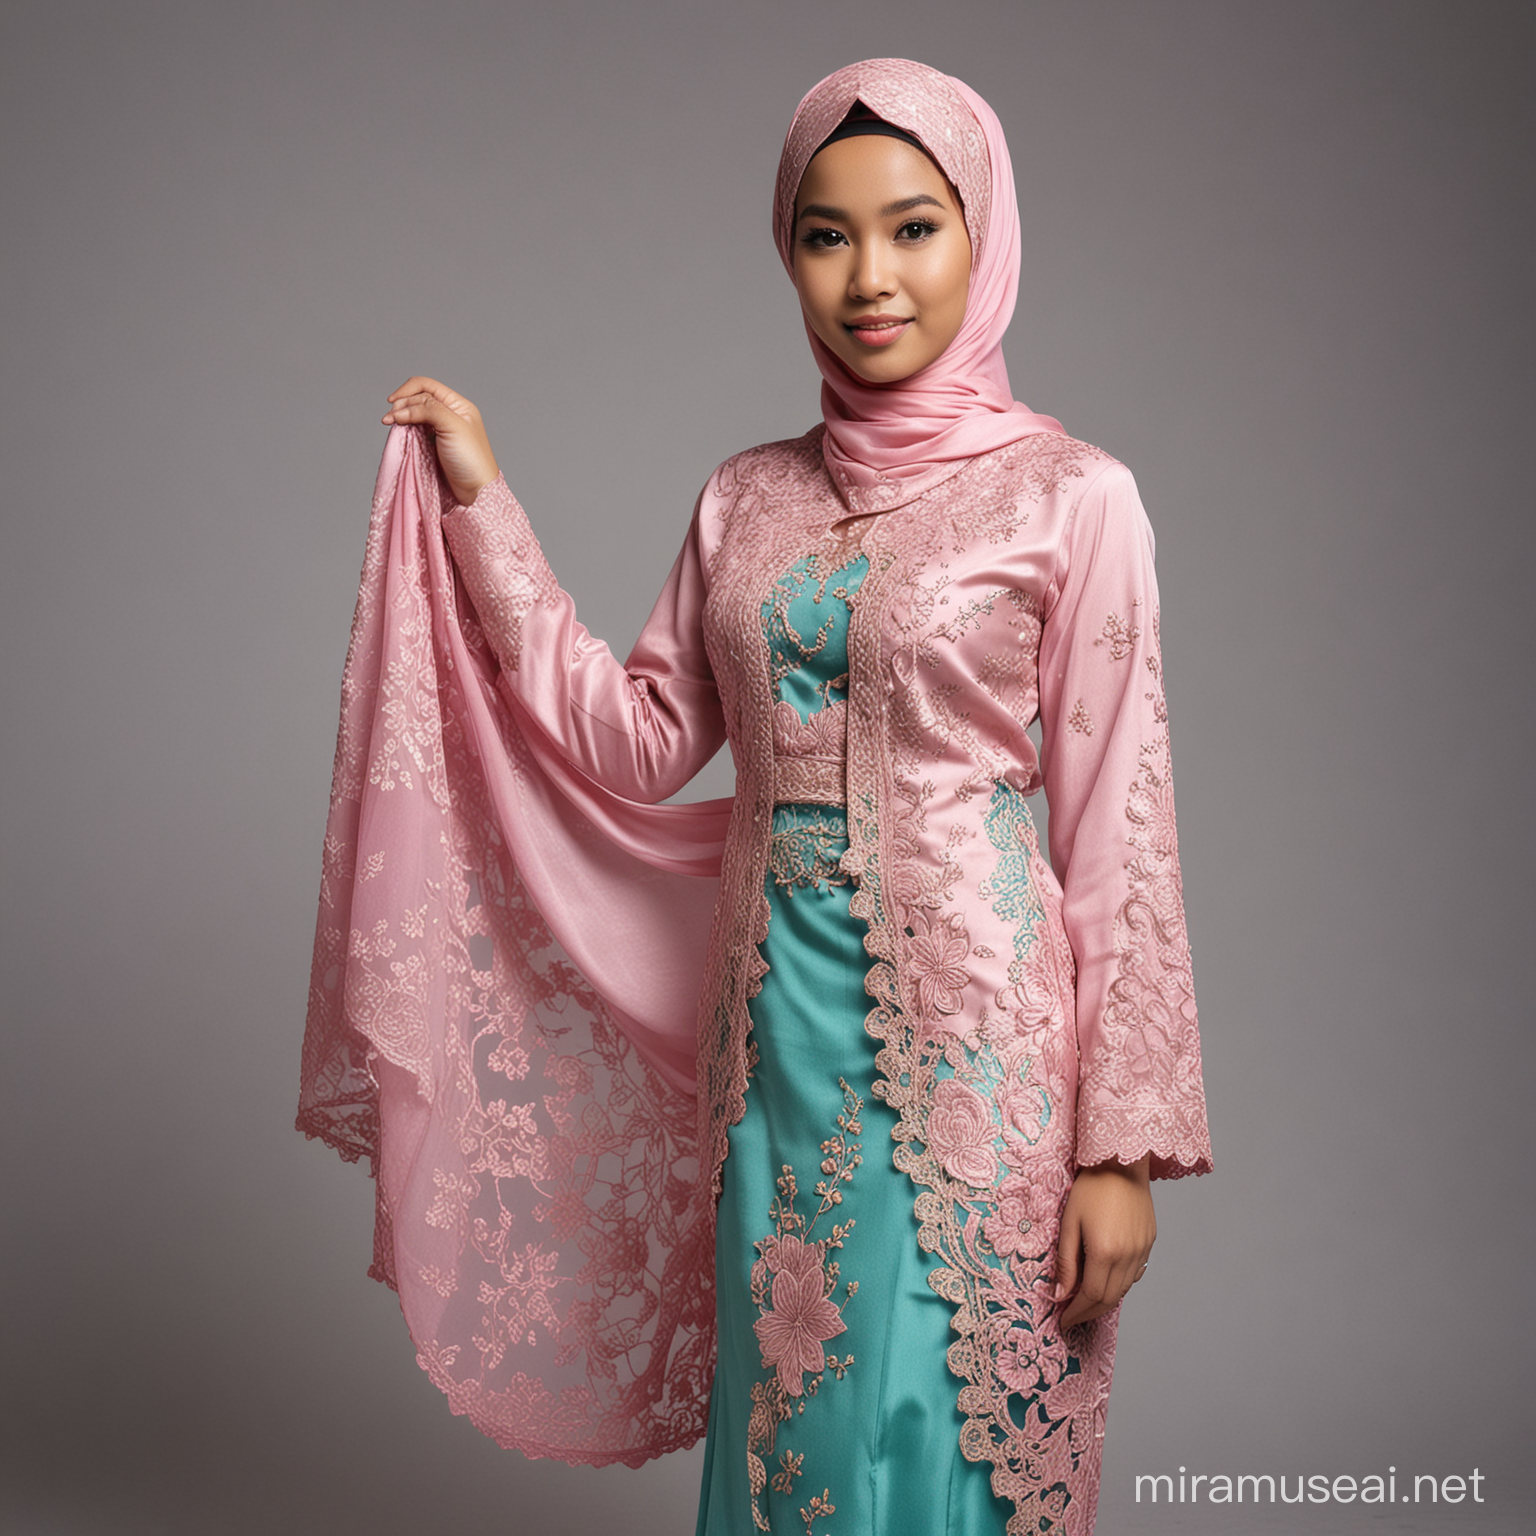 malay girl wearing traditional kebaya, full body with hijab



